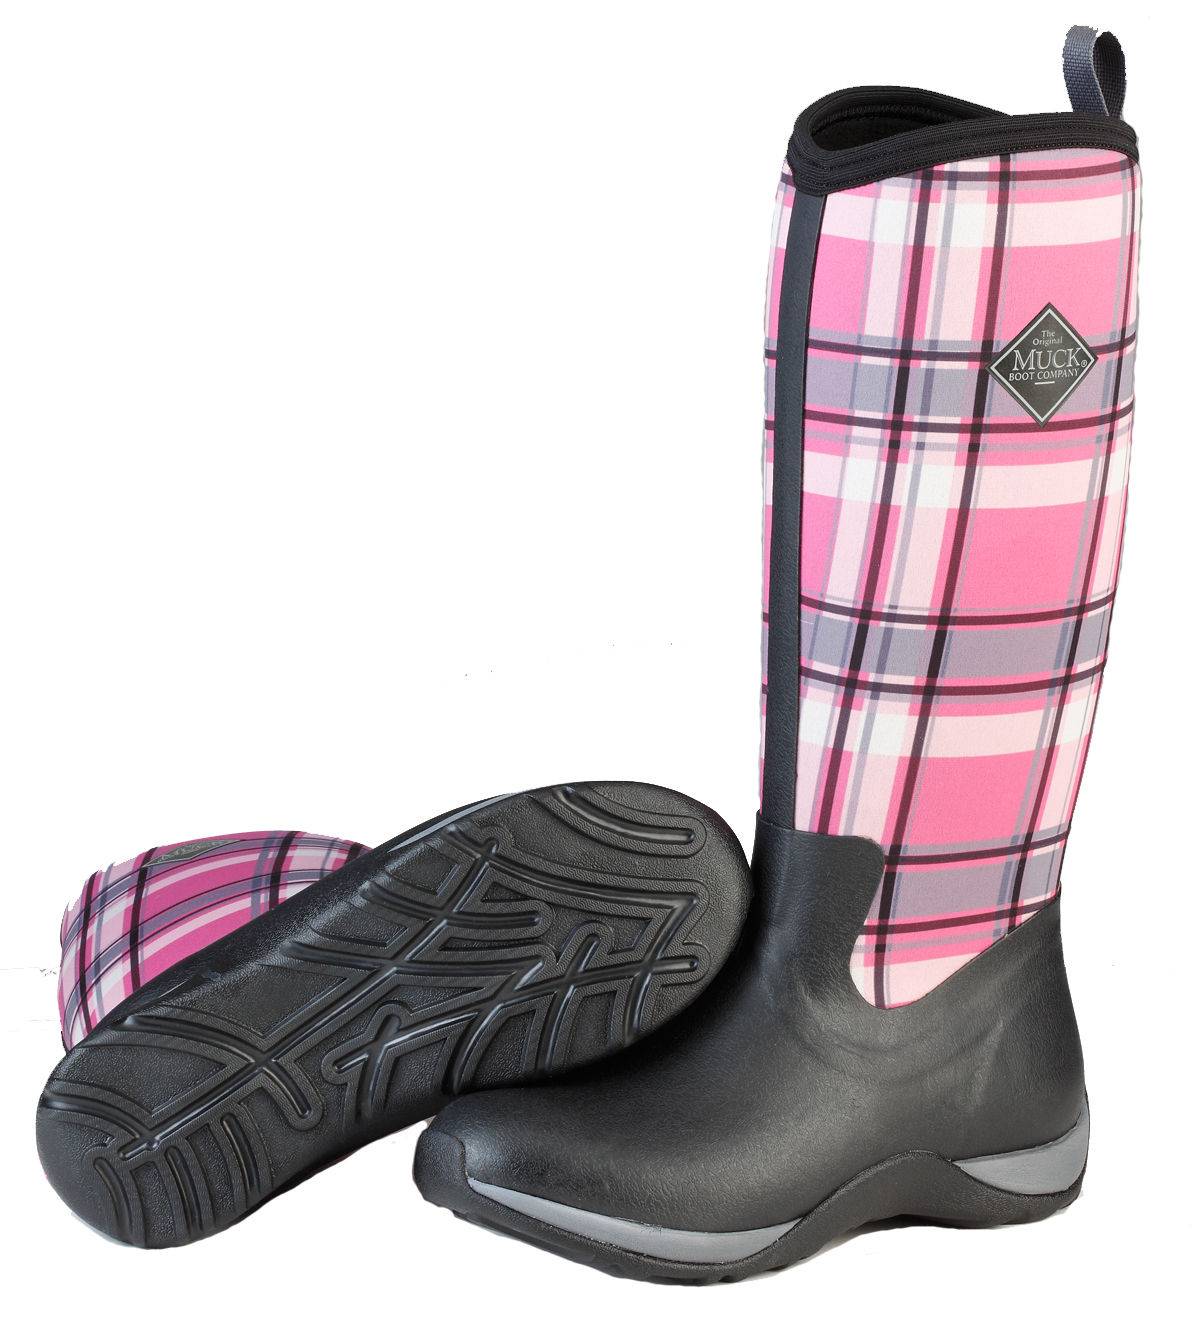 Muck Boots Arctic Adventure - Ladies - Black/Pink Plaid